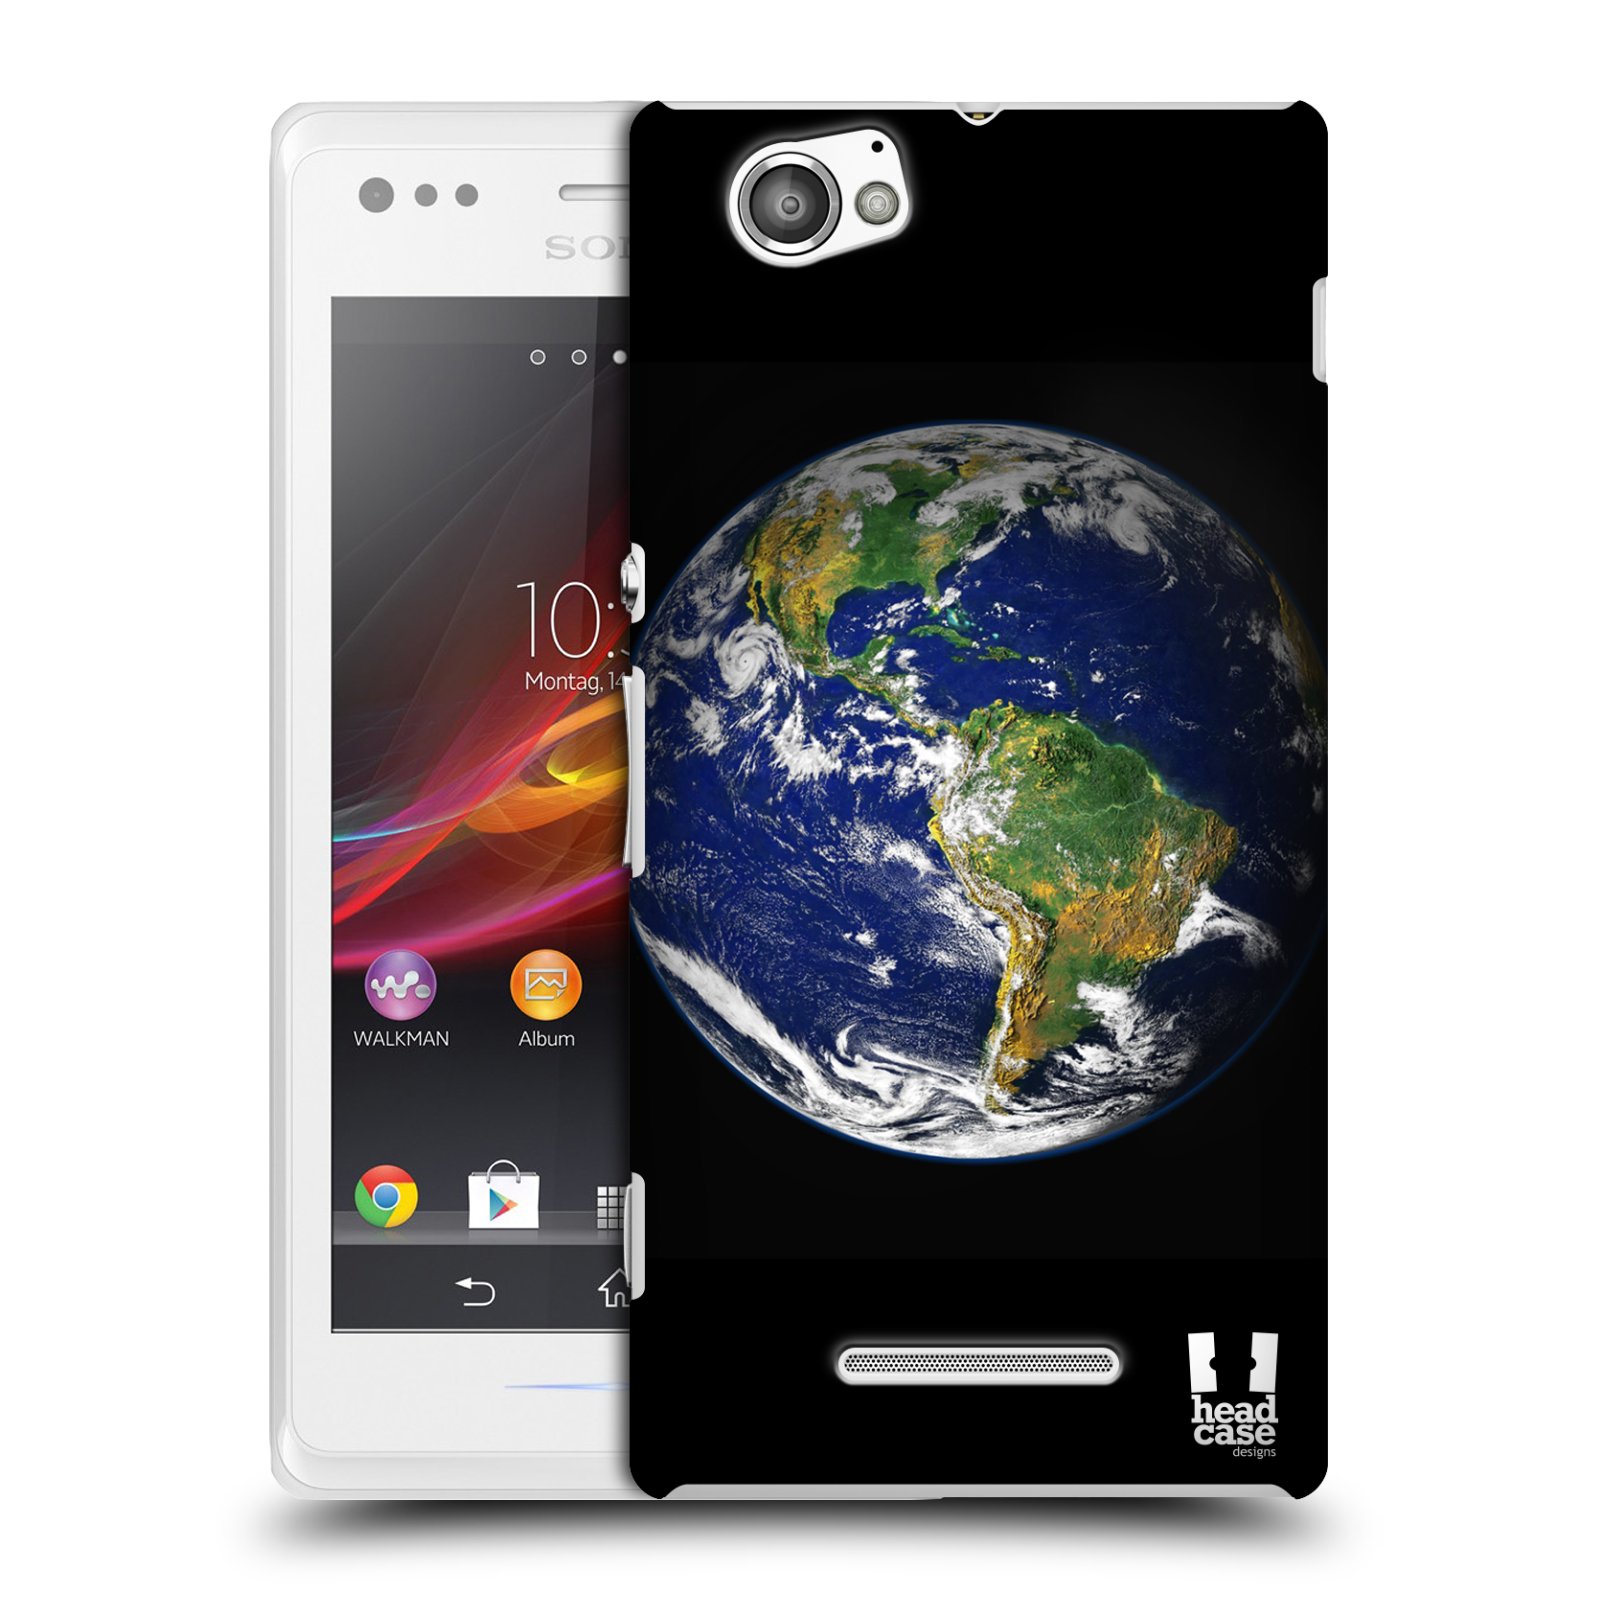 HEAD CASE plastový obal na mobil Sony Xperia M vzor Vesmírná krása ZEMĚ